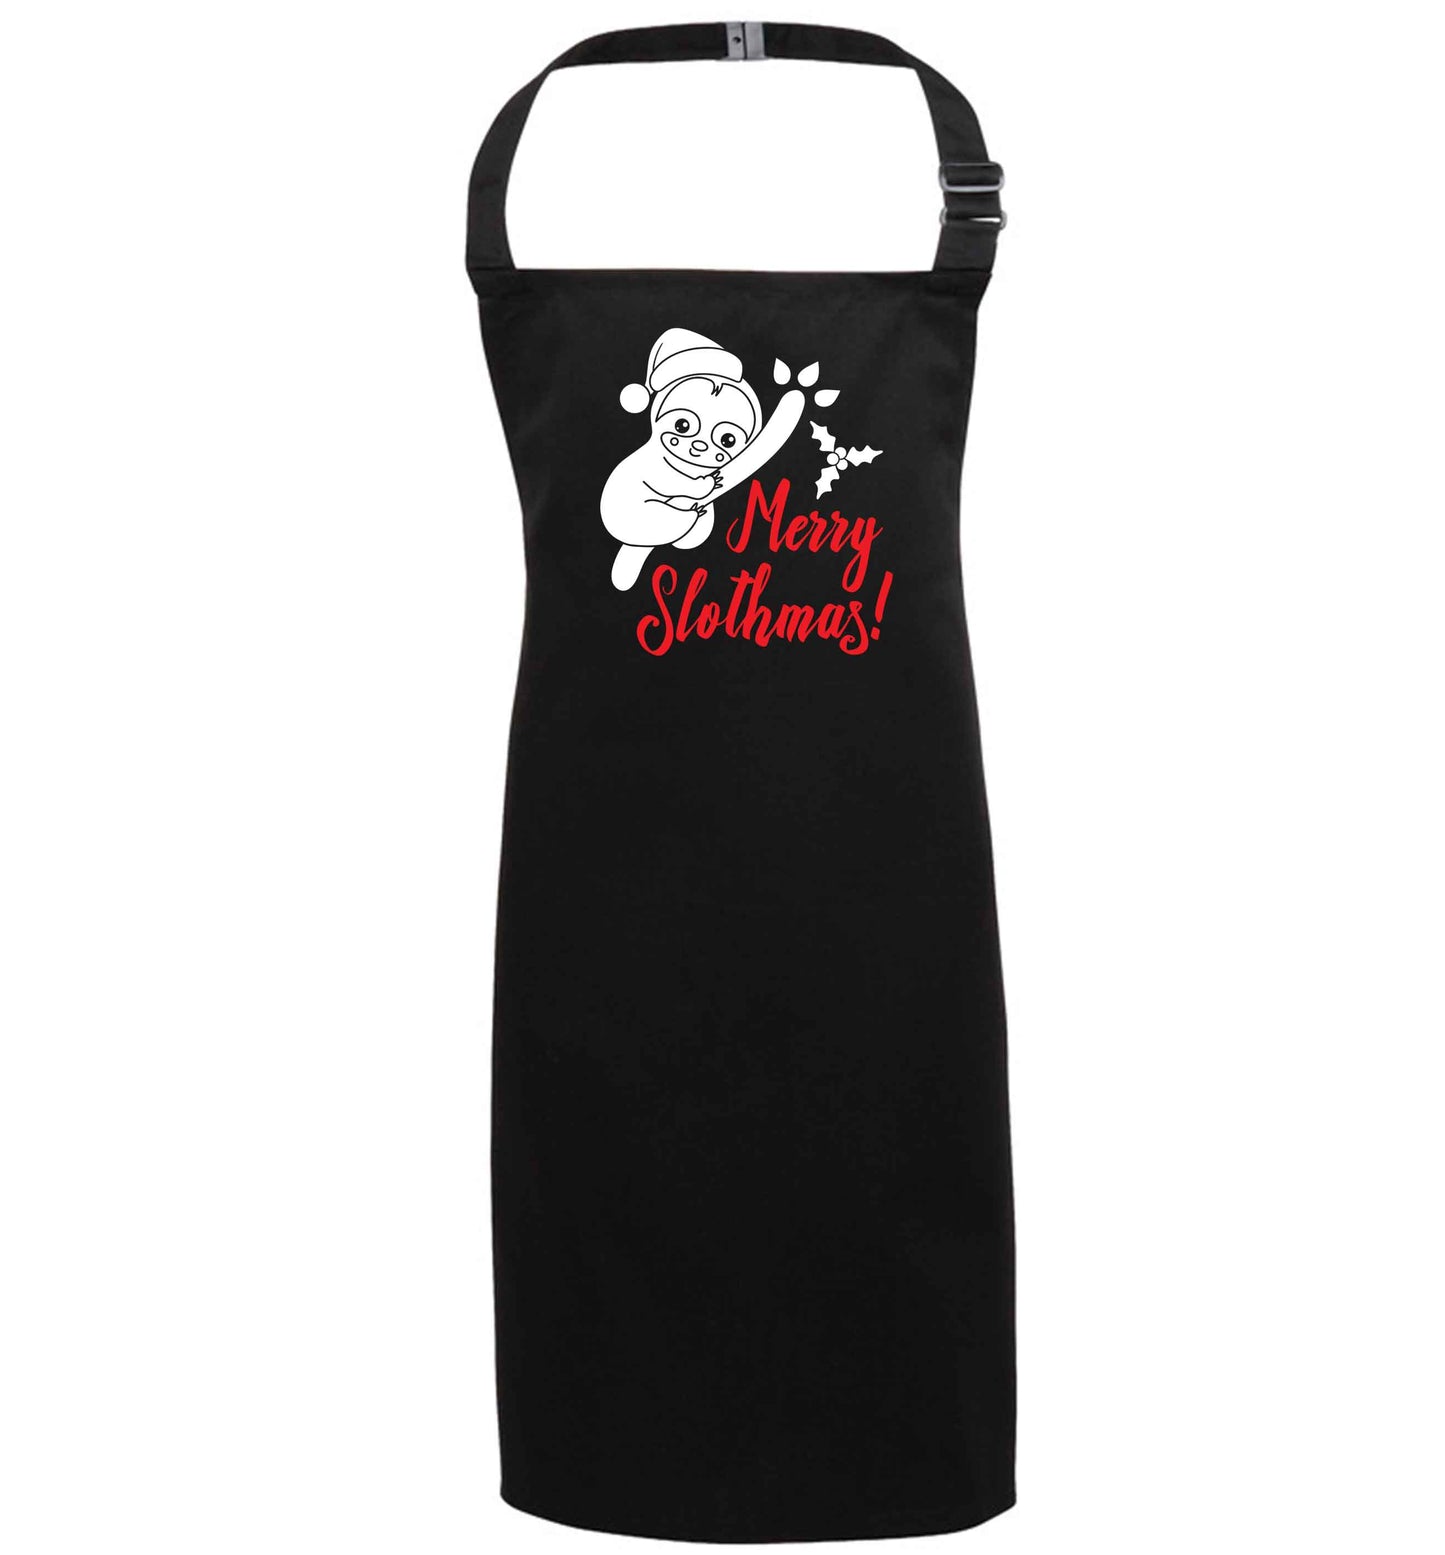 Merry Slothmas black apron 7-10 years